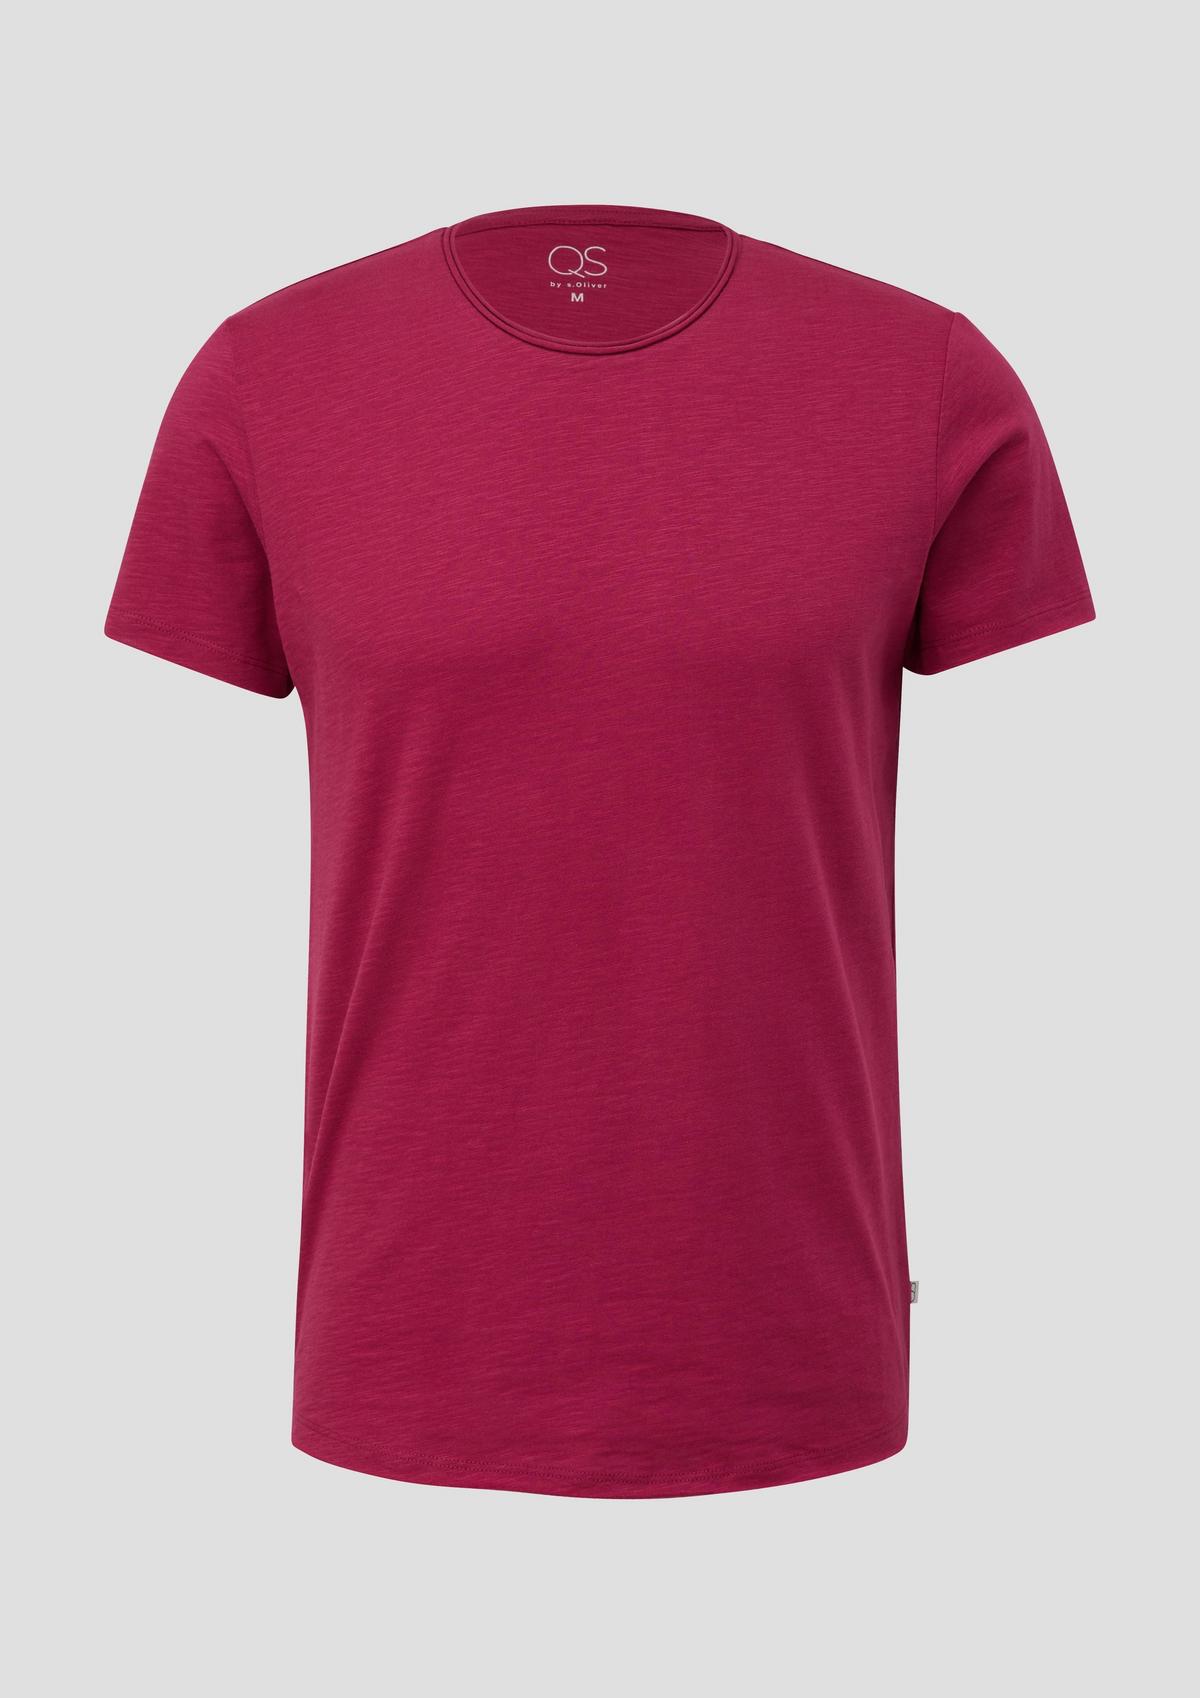 s.Oliver T-shirt with a slub yarn texture